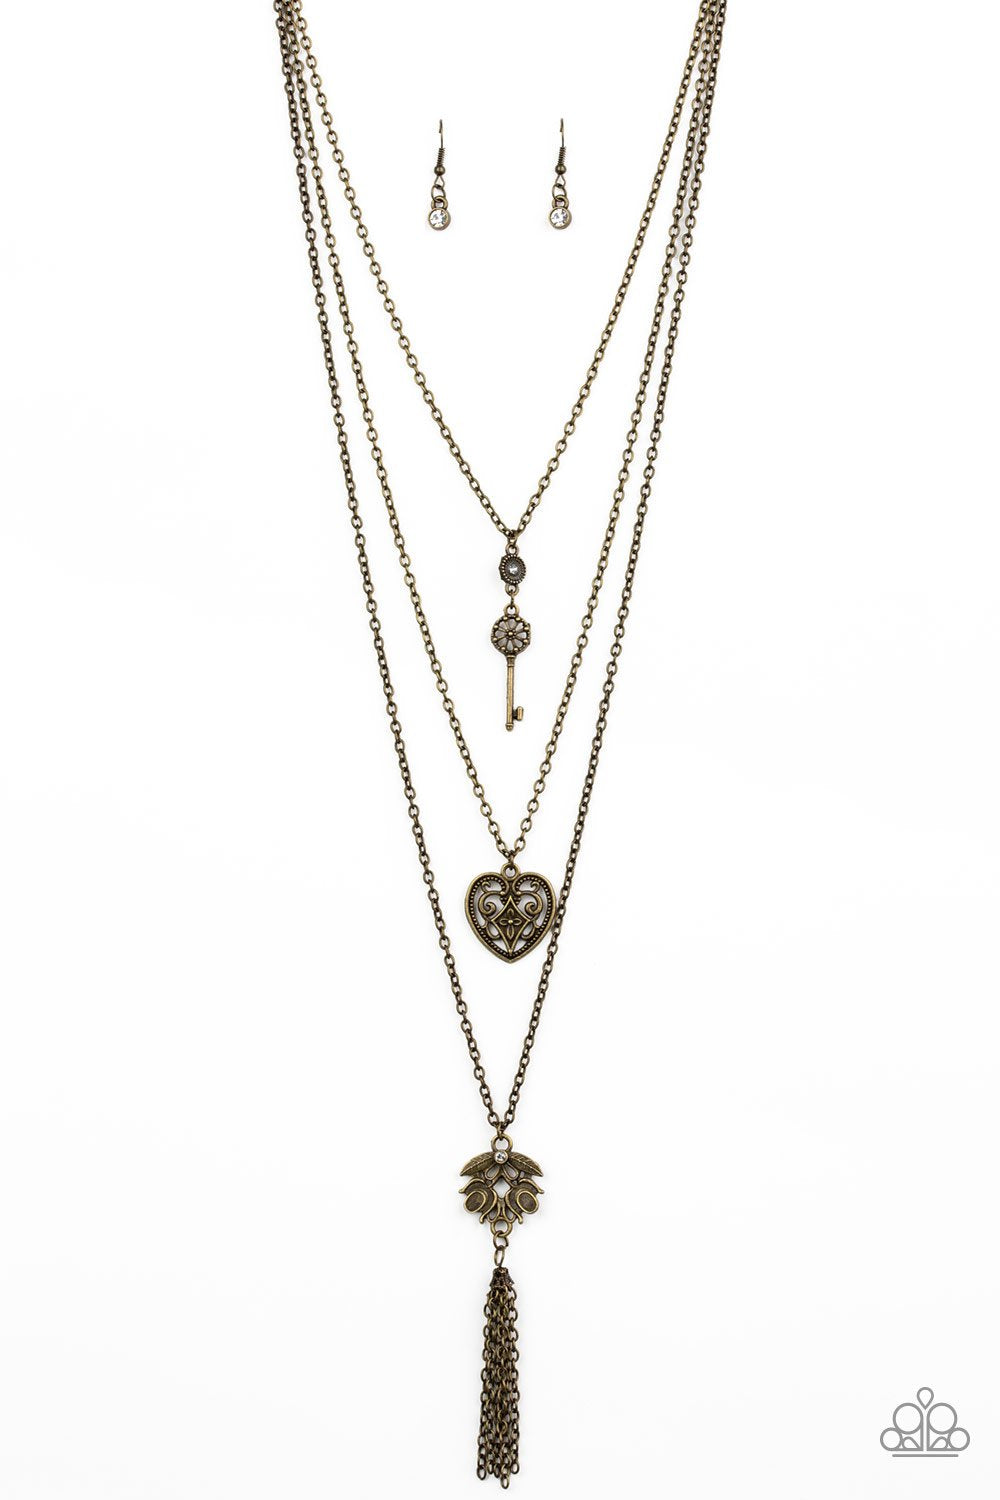 Love Opens All Doors Brass Necklace freeshipping - JewLz4u Gemstone Gallery